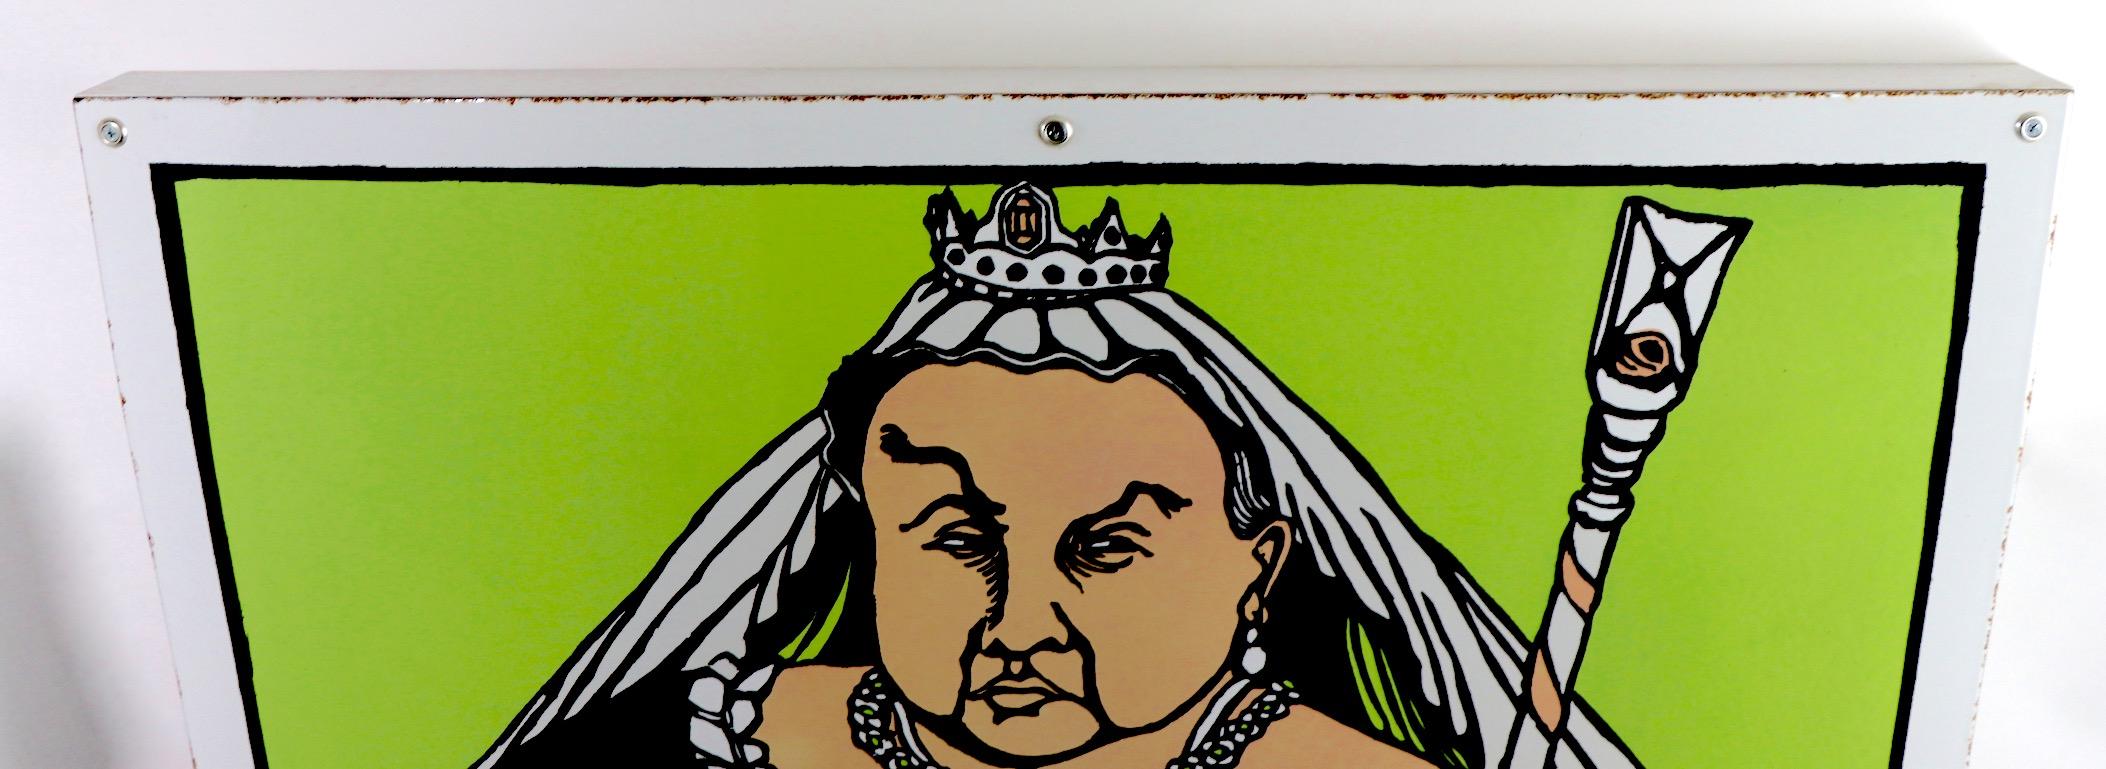 English Pop Art Graphic Design Advertising Sign Queen Victoria by Lars Hokanson